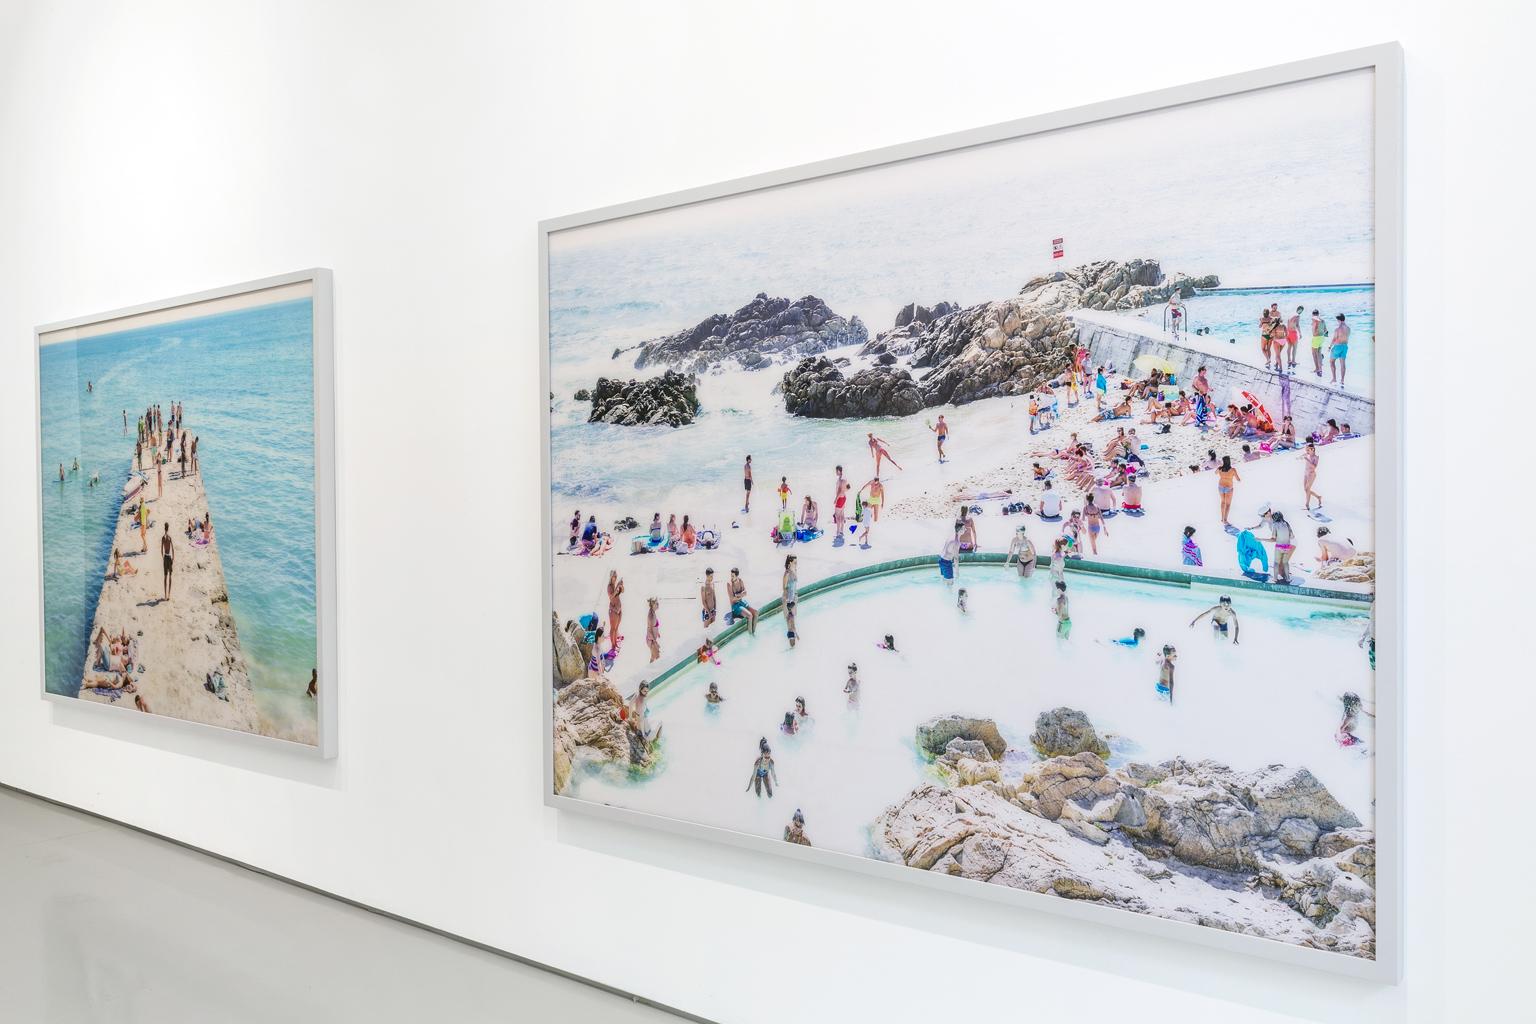 Plage du Prophete Evening (framed) - large scale photo of Mediterranean beach  For Sale 6